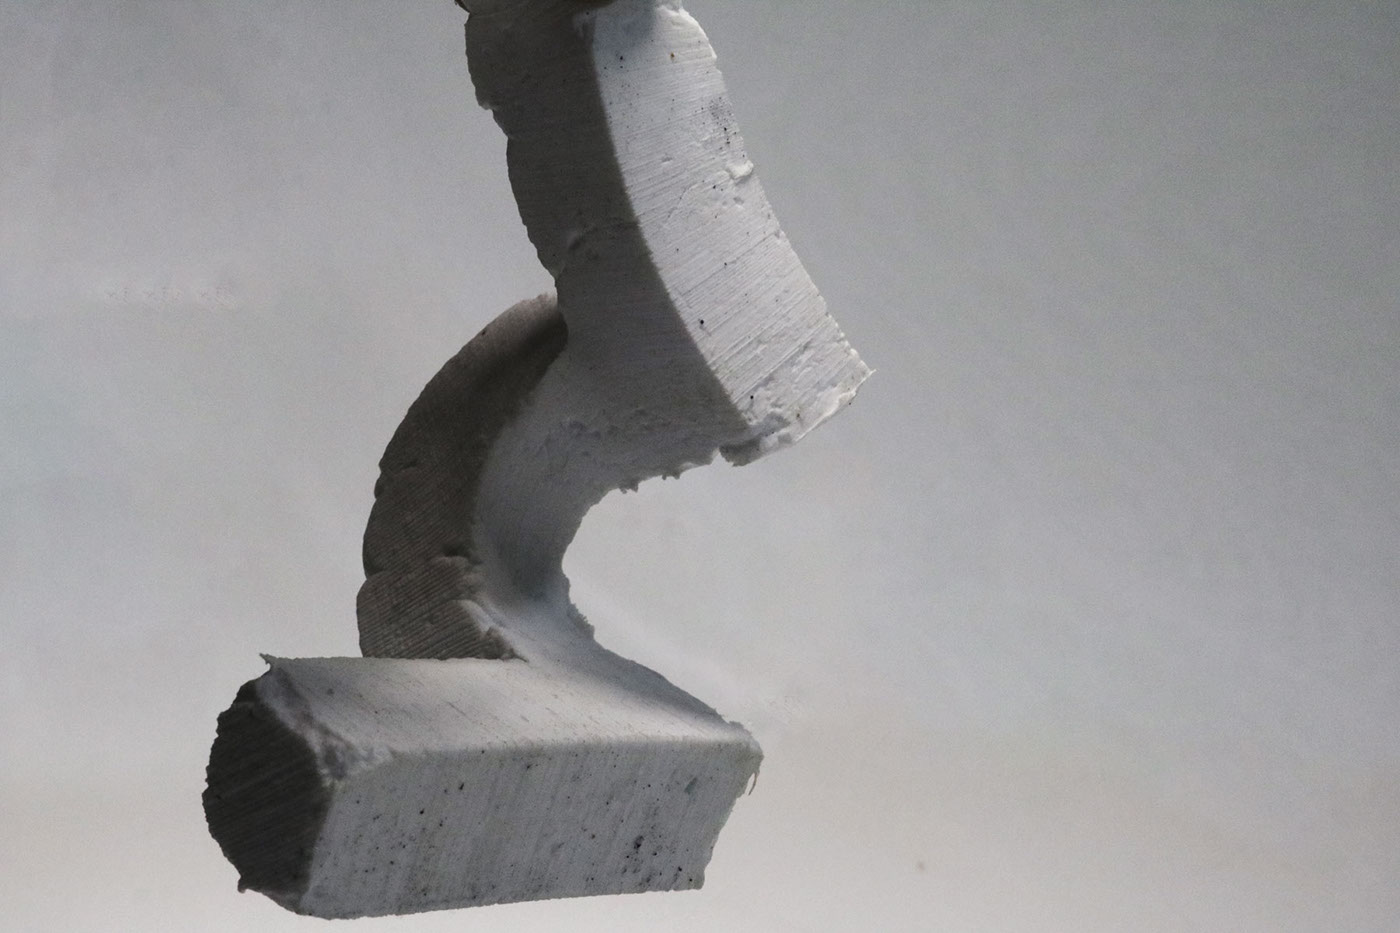 wood aluminium basalt Hangul epoxy cement fabric material object Project